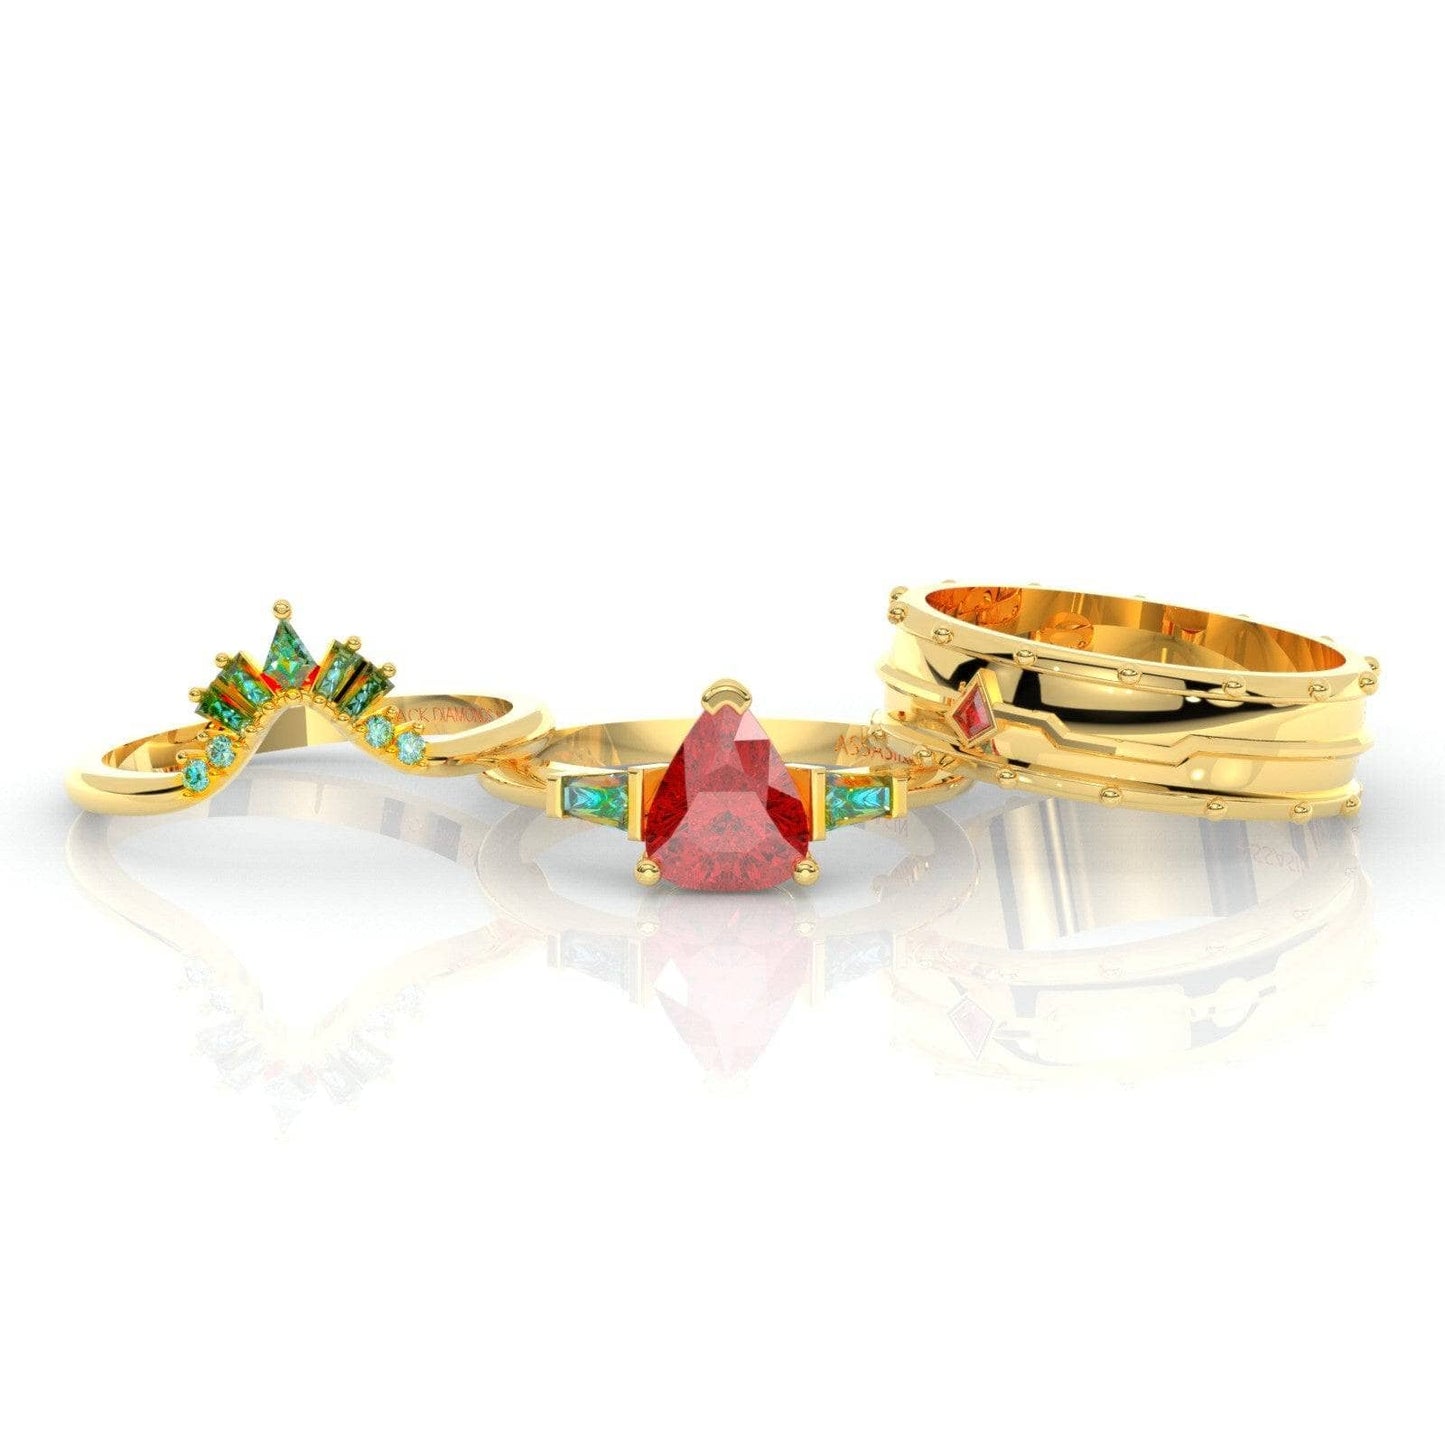 Assasin's Romance Engagement Ring- 14k Yellow Gold Video Game Inspired Rings - Black Diamonds New York